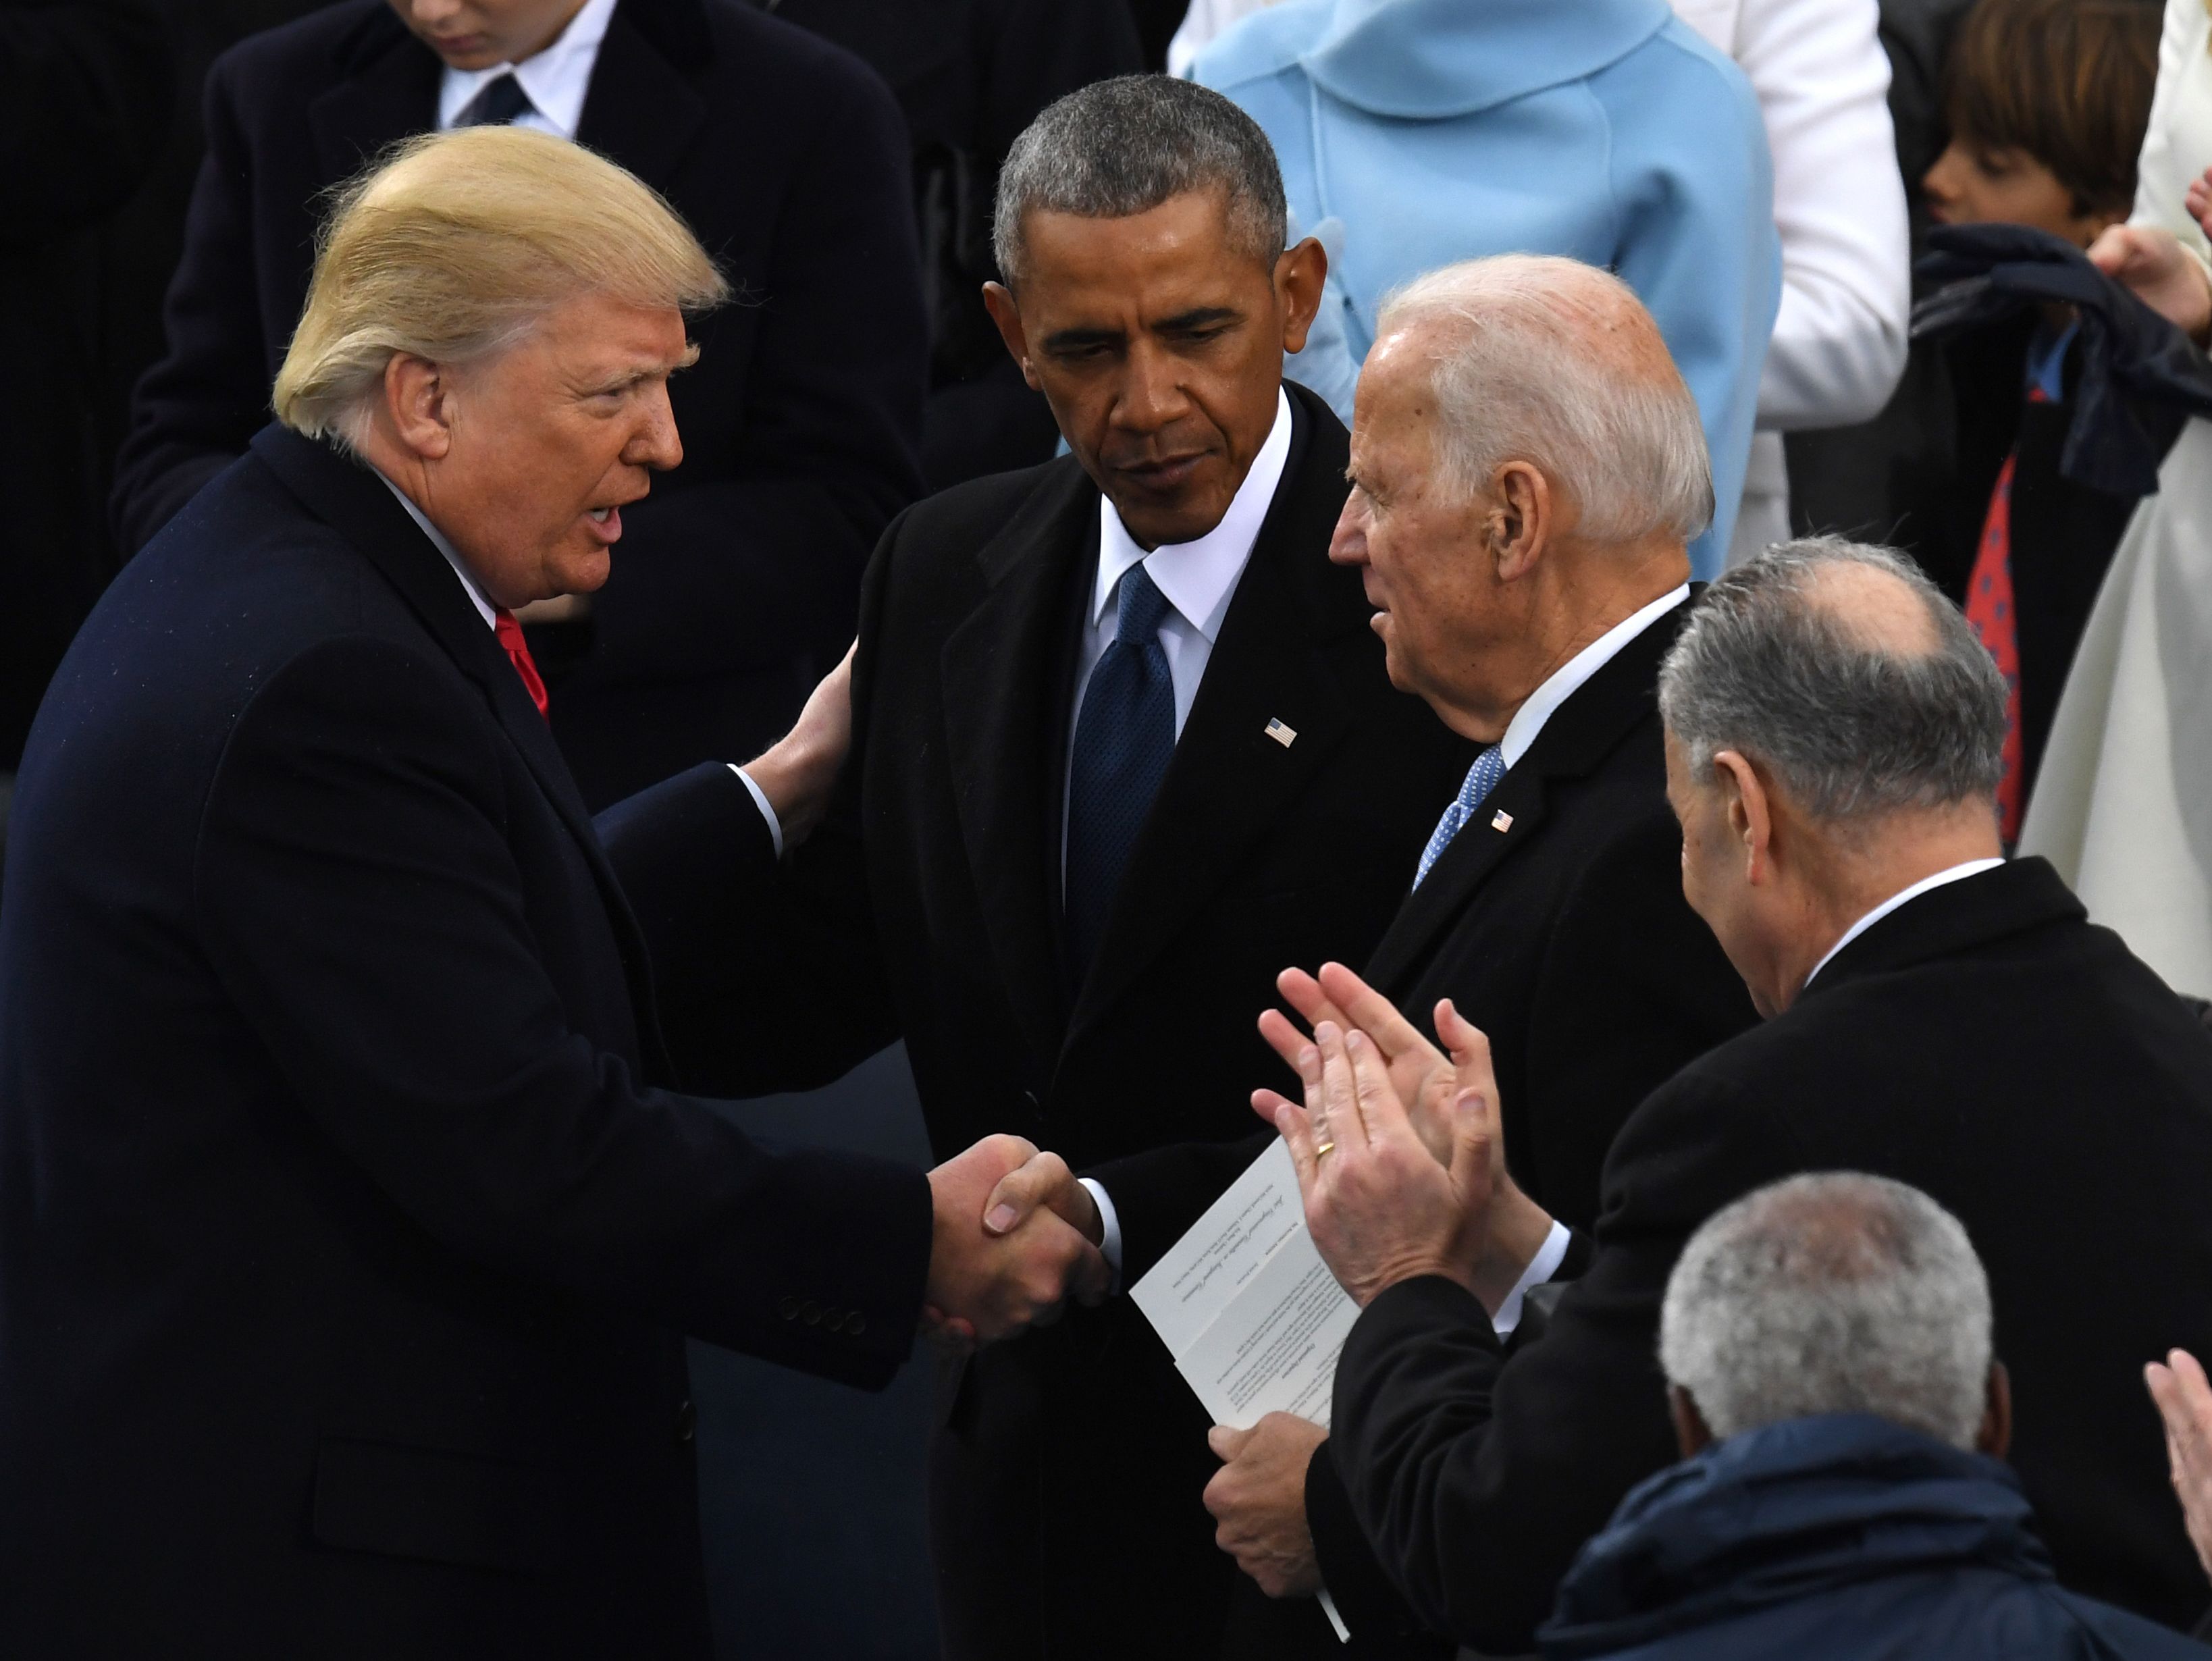 Donald Trump, Barack Obama and Joe Biden